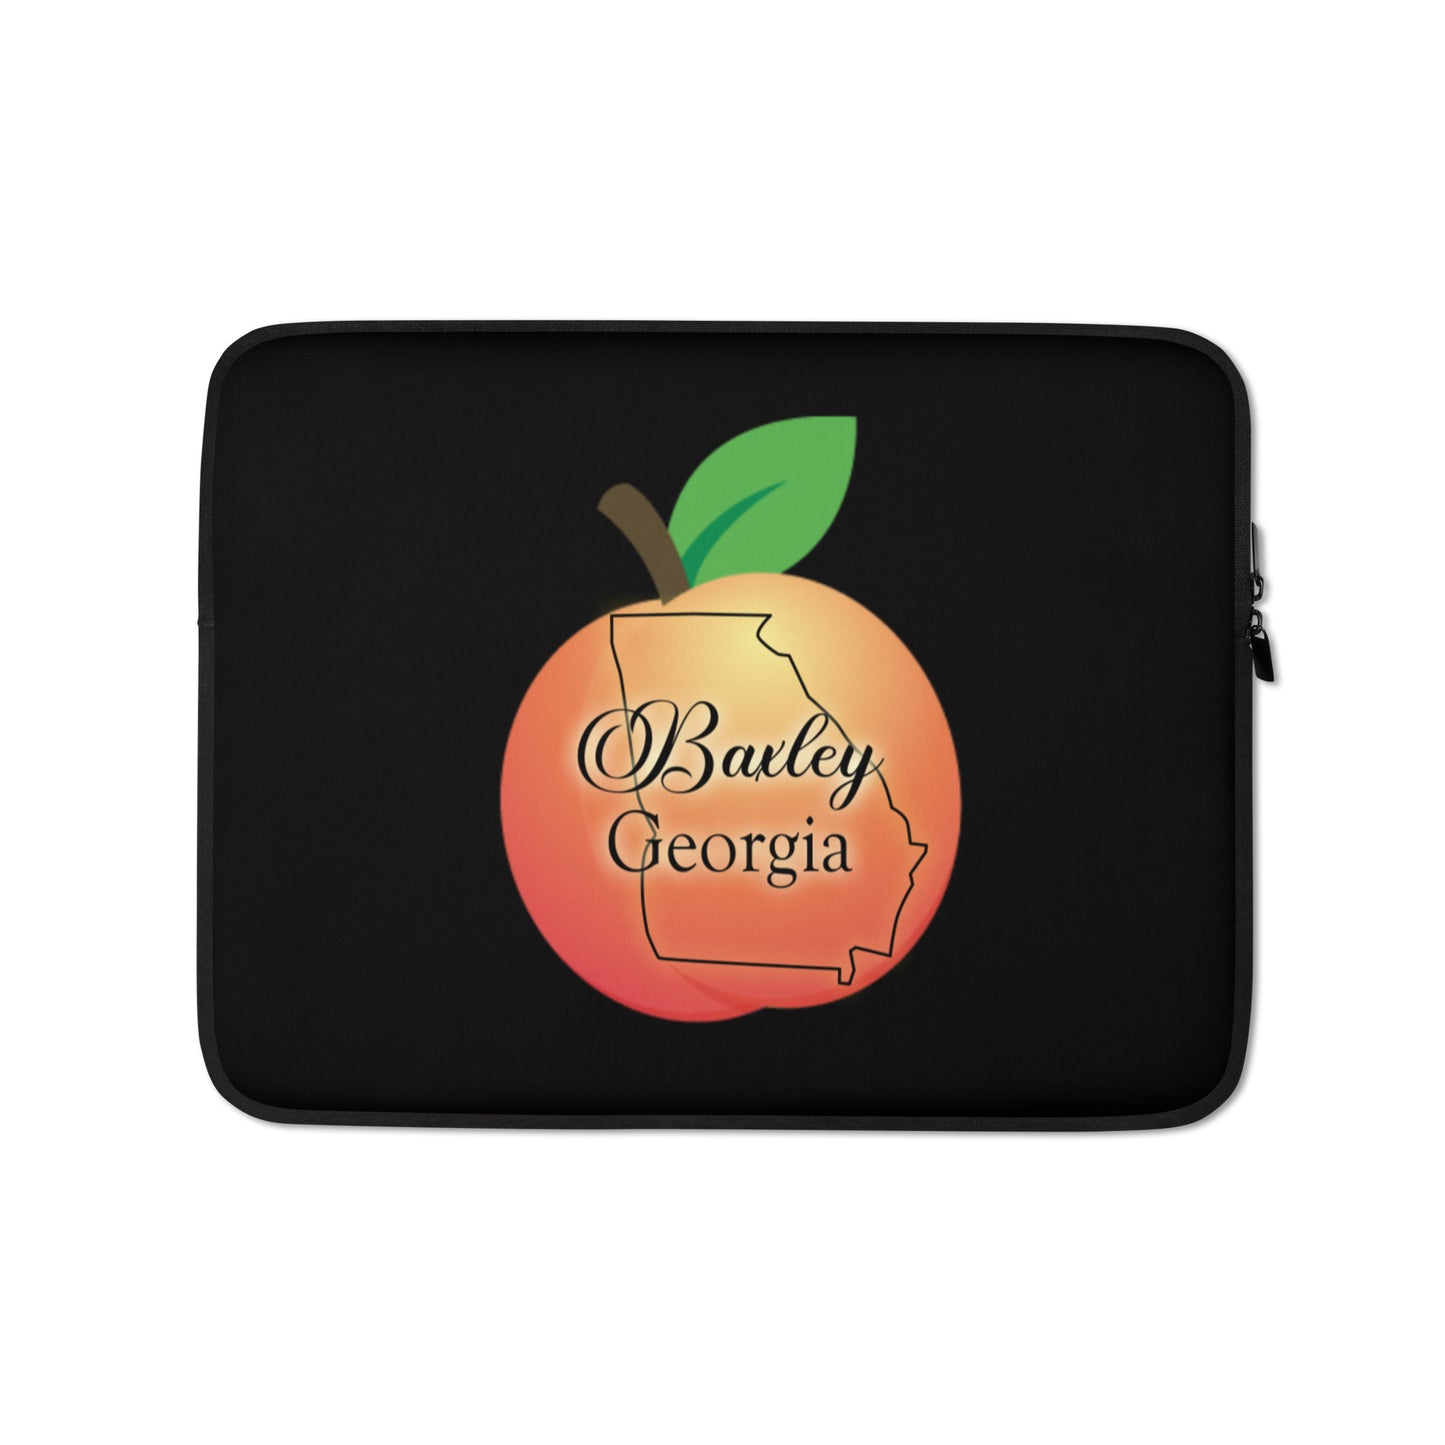 Baxley Georgia Laptop Sleeve